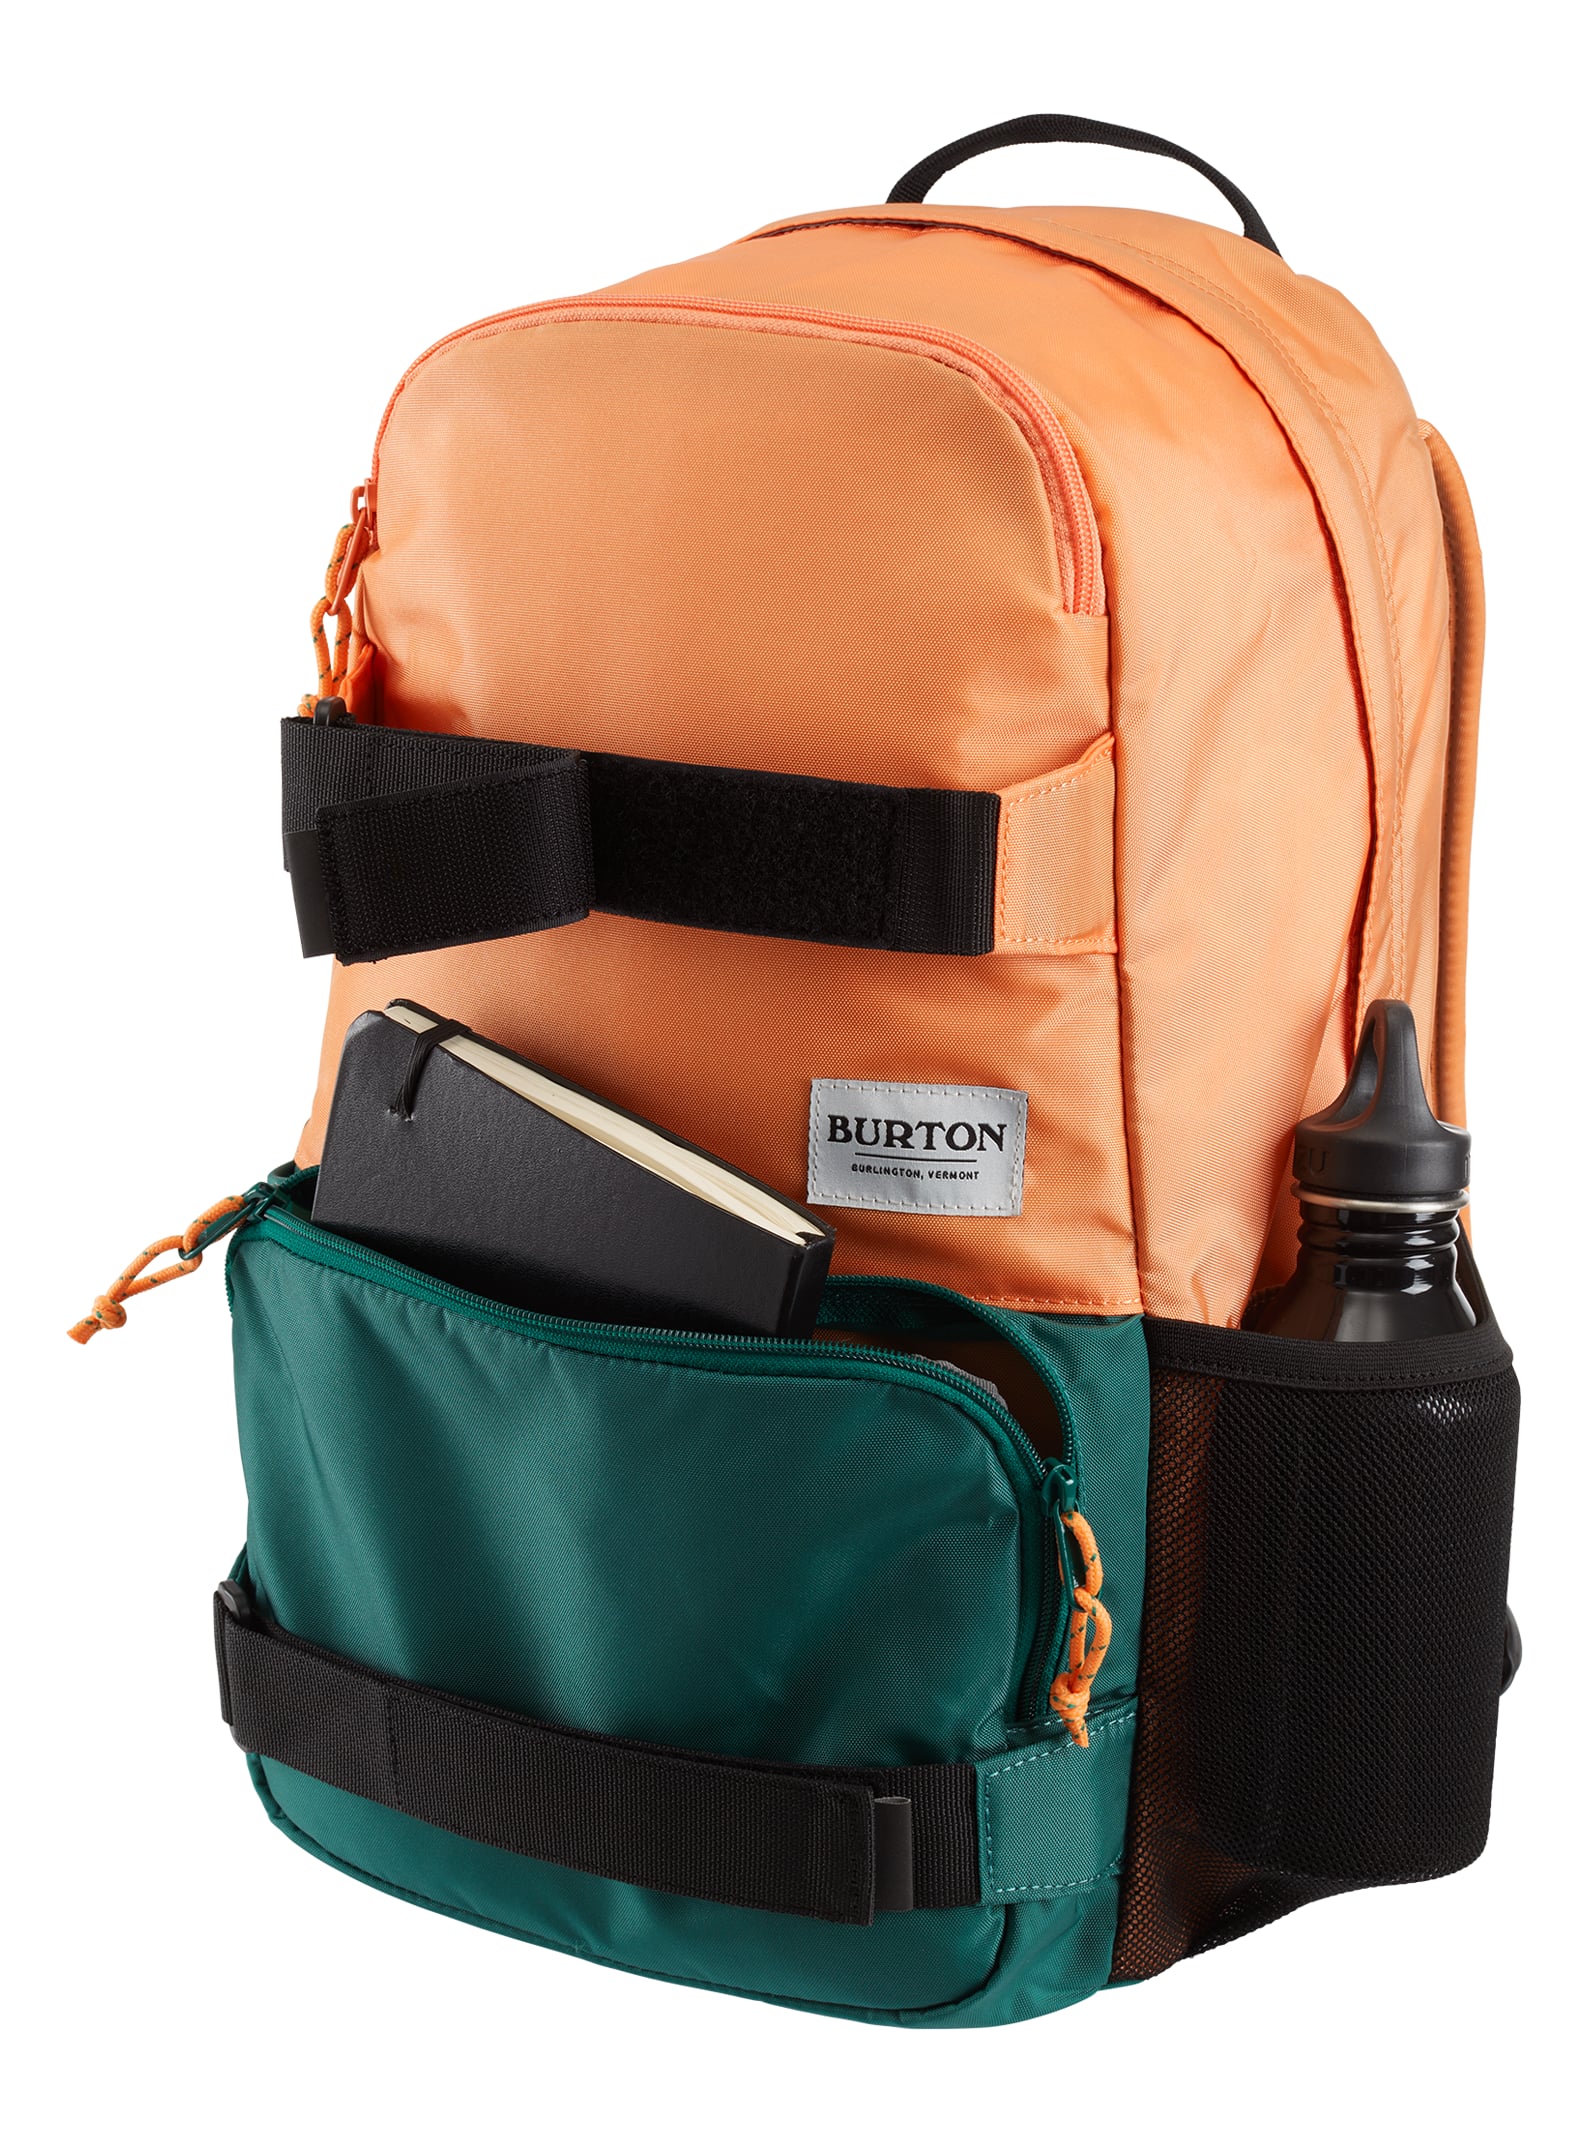 Burton Treble Yell 21L Backpack | Burton.com Spring 2021 IT